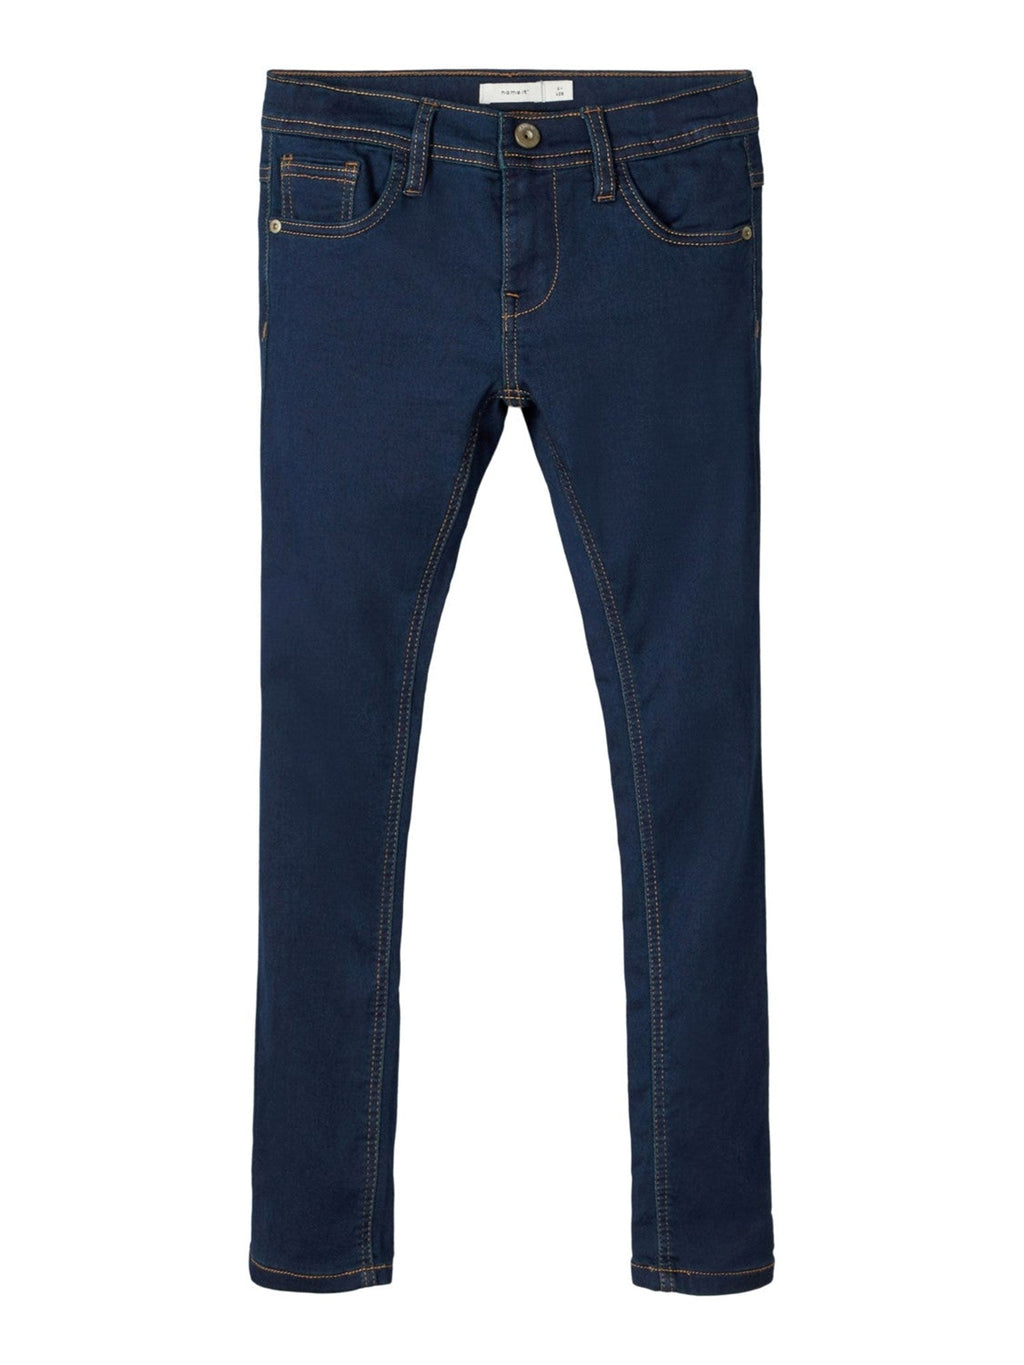 Robin Stretch Jeans - dunkelblauer Jeans